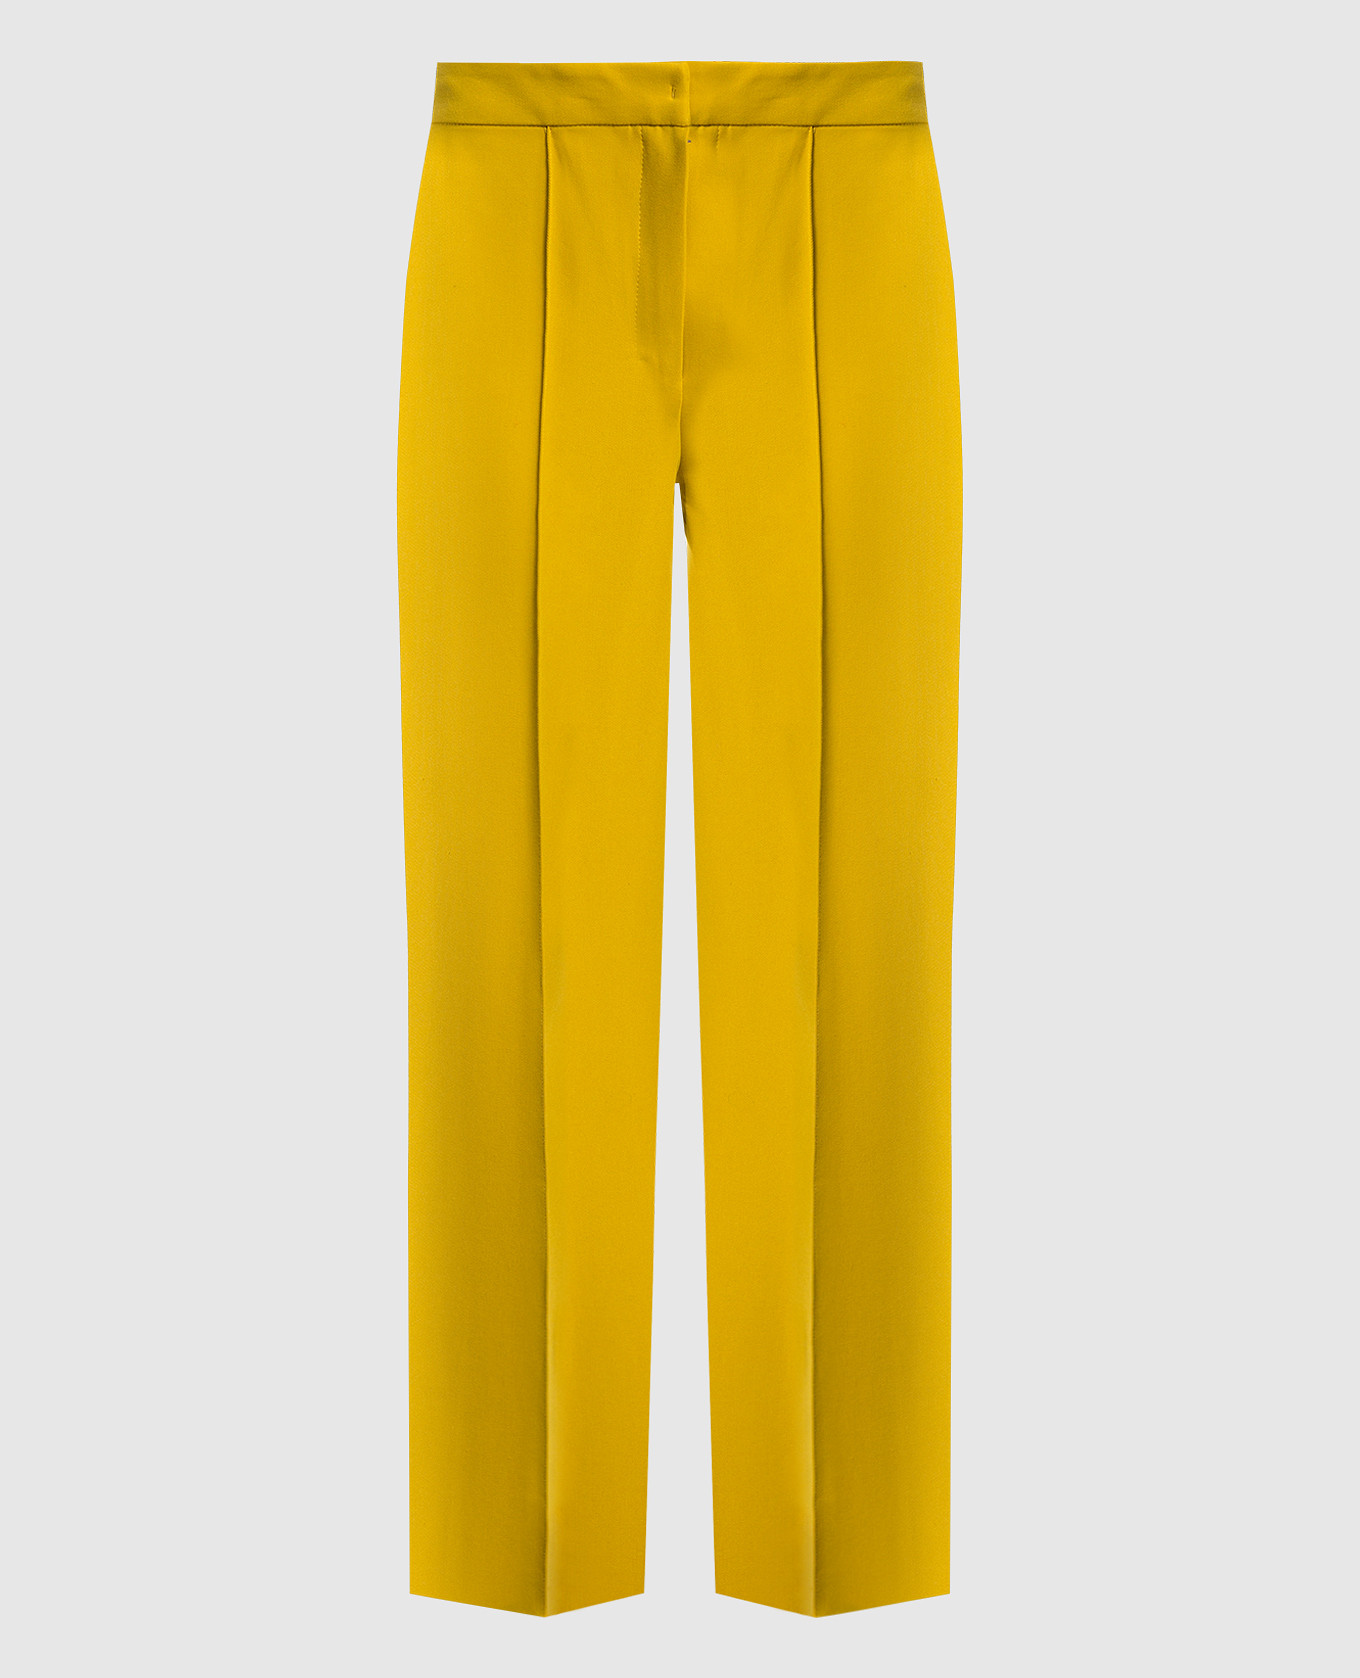 Yellow pants TOTEM